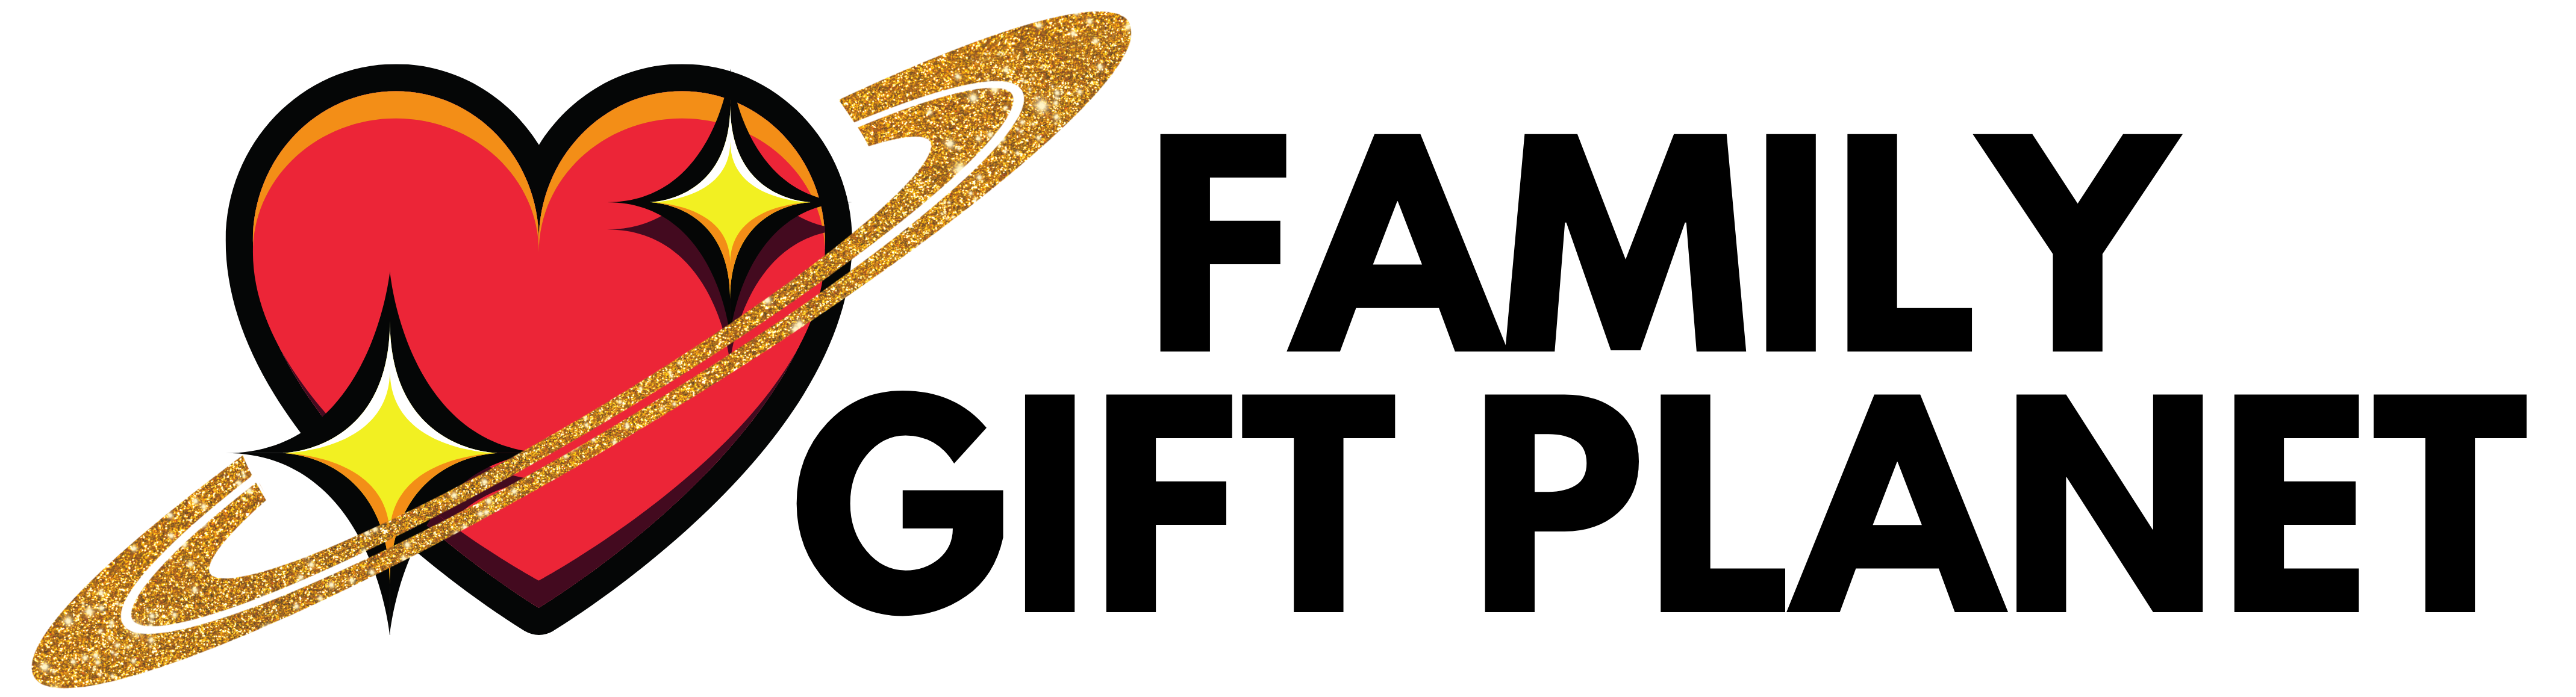 Family Gift Planet